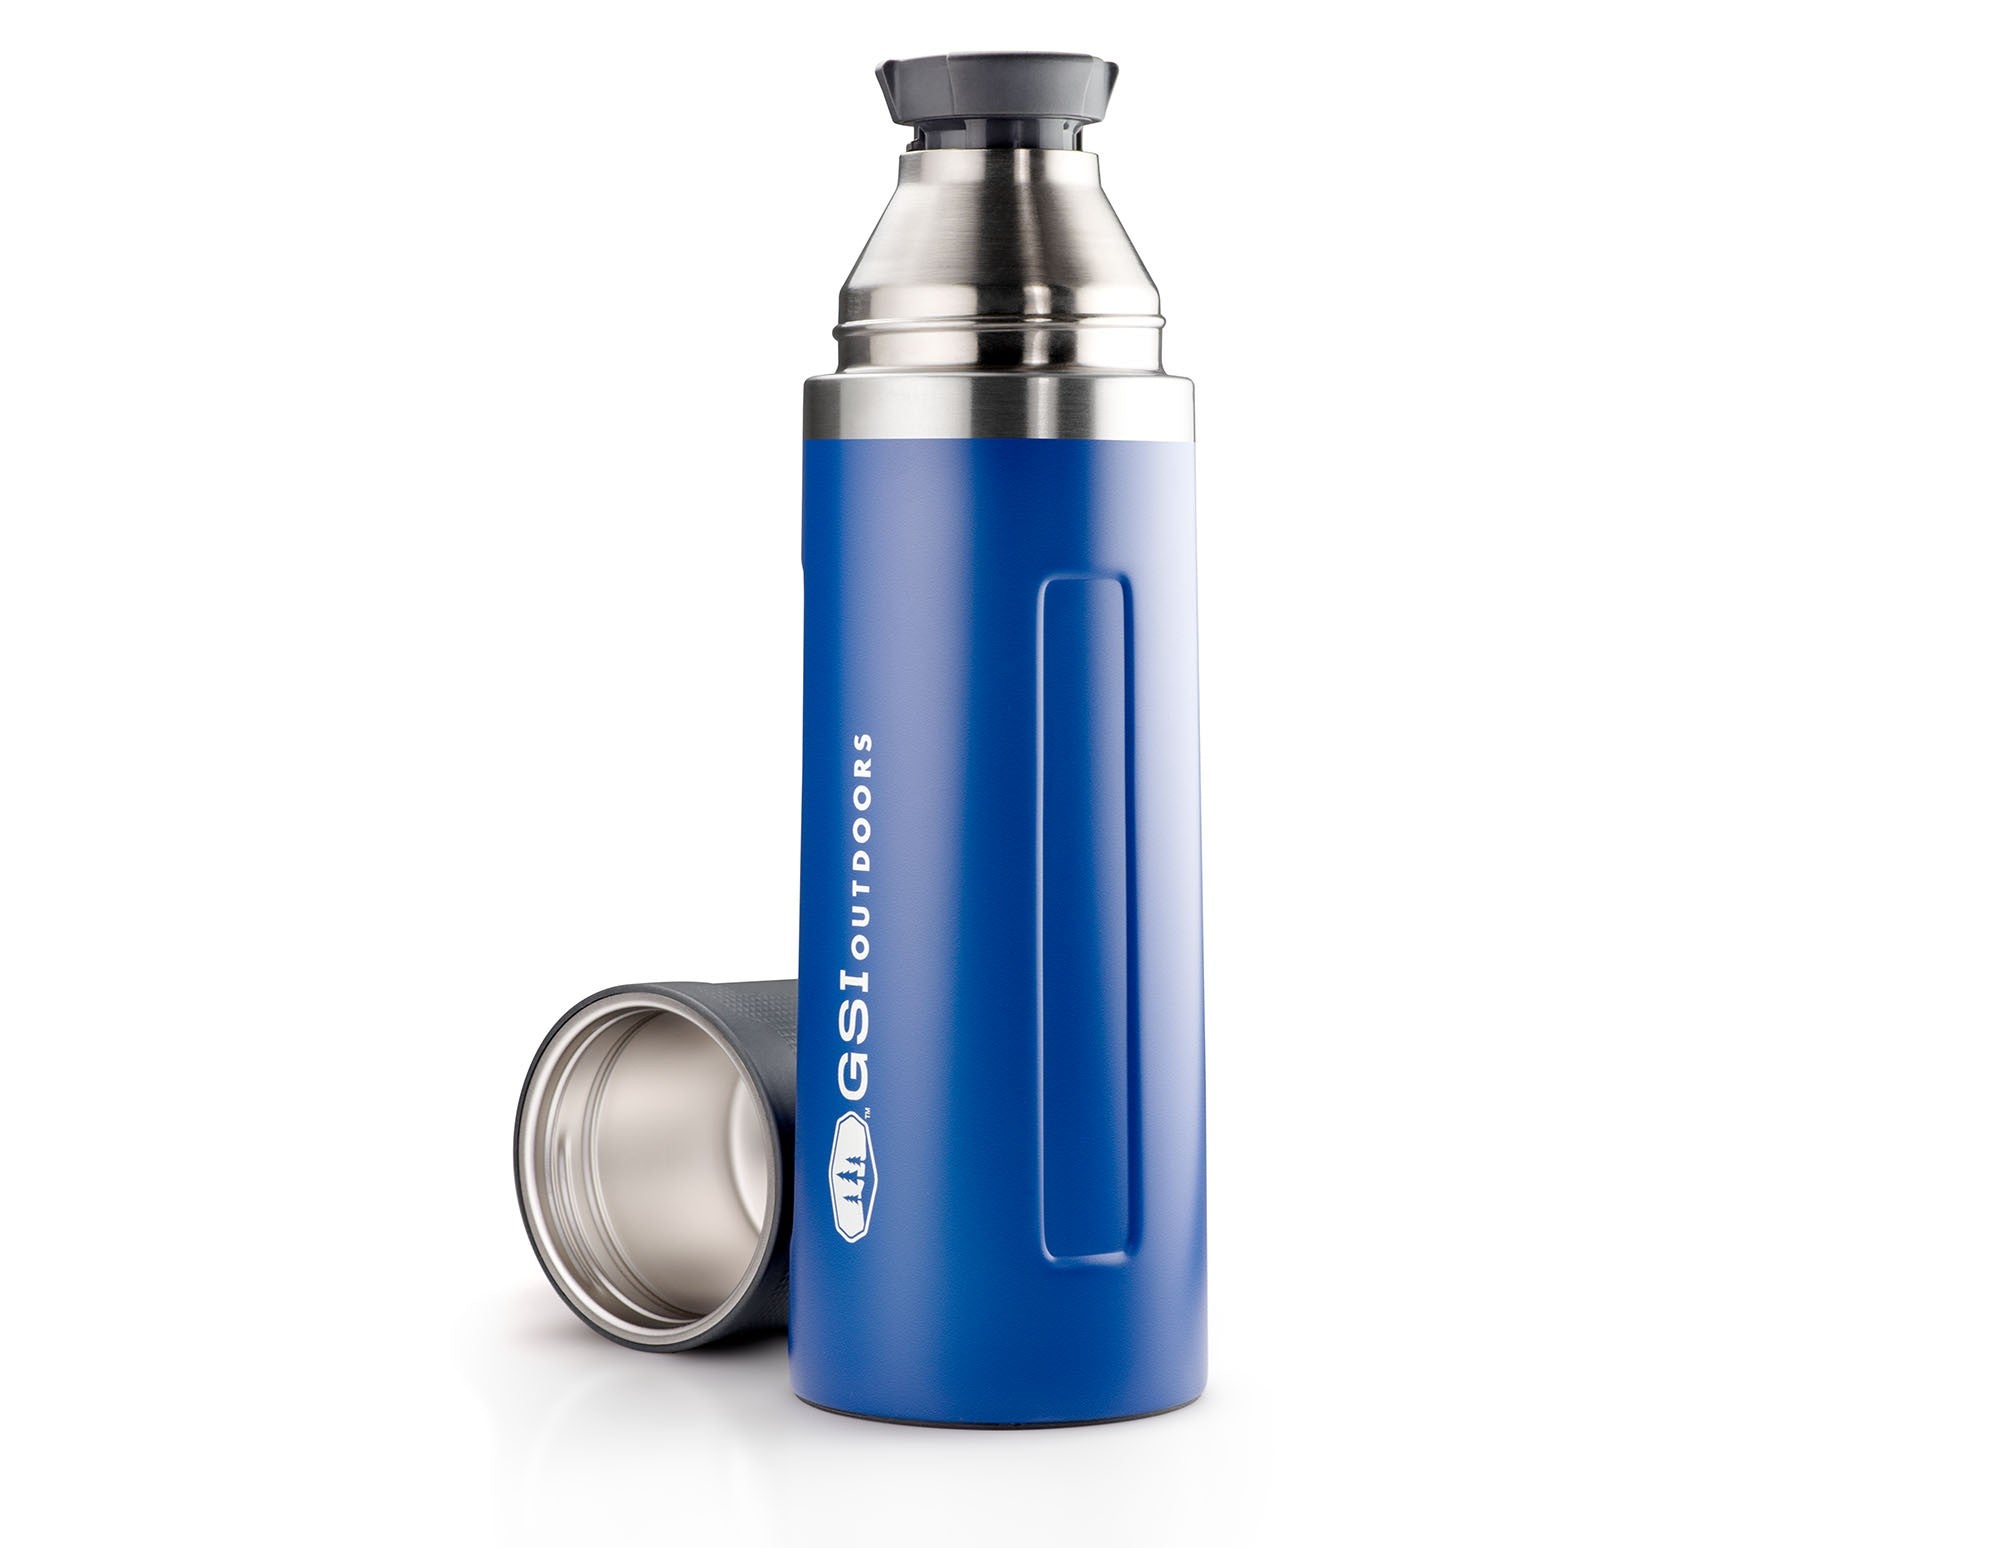 Insulated Water Bottle, 18/8 (304) Stainless Steel, Super Slim Skinny Mini,  Portable, Leak Proof, 10oz, Black